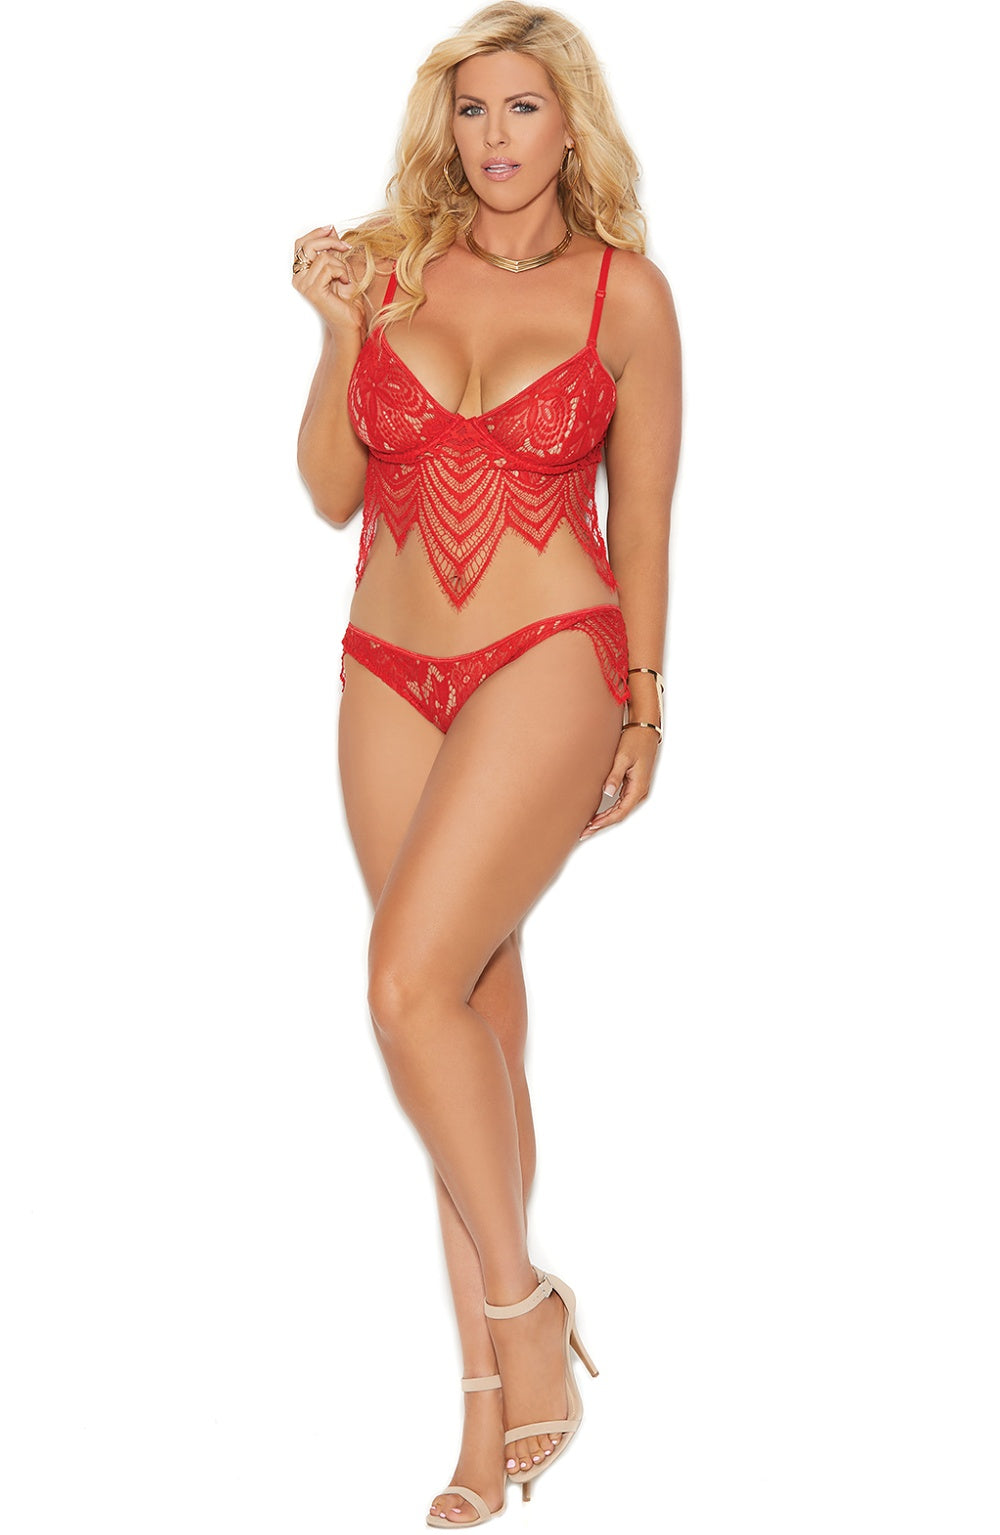 Red womens lingerie set - Sexylingerieland